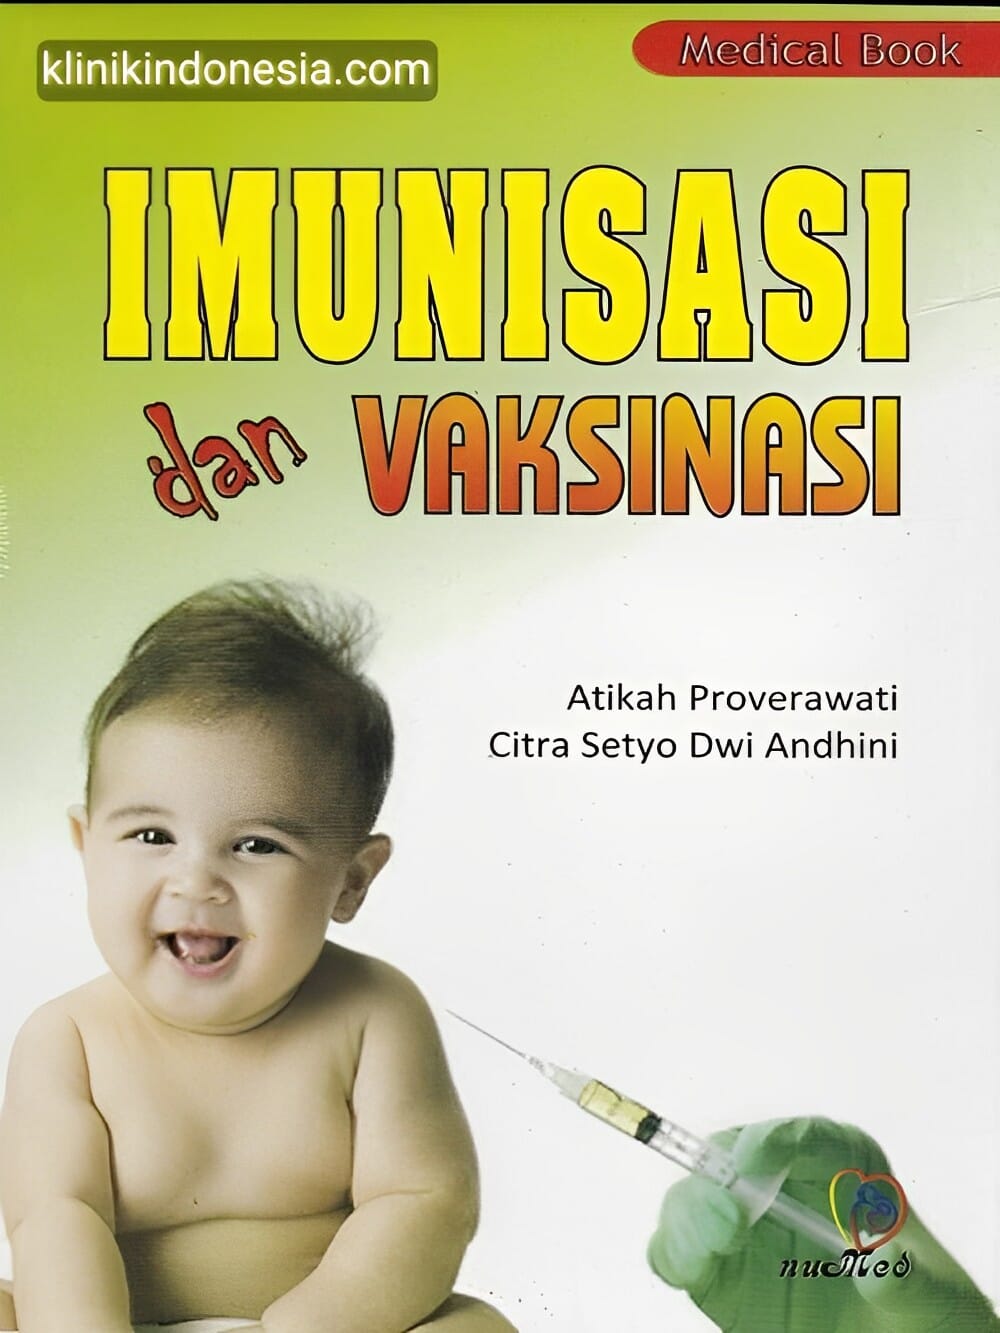 Gambar Imunisasi dan Vaksinasi